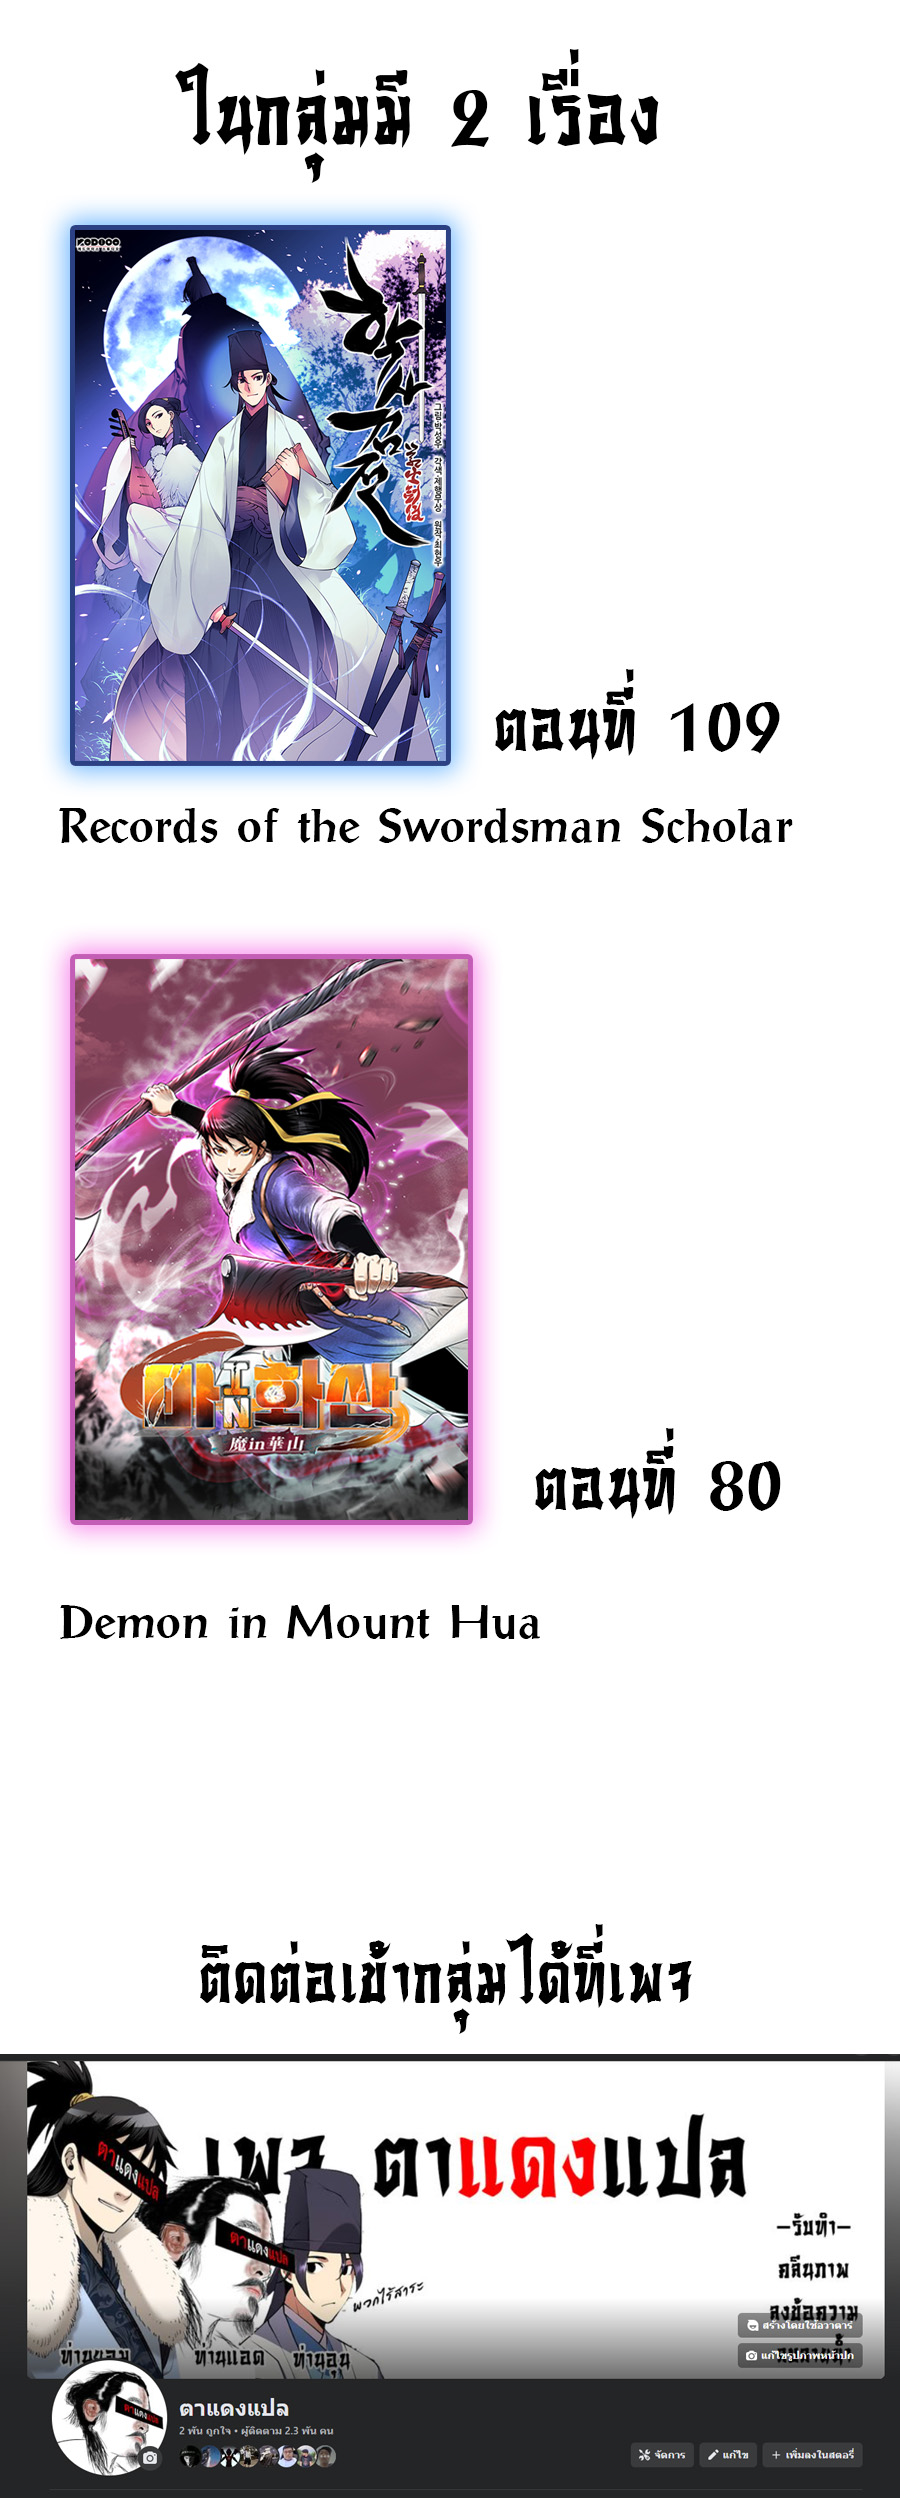 Records of the Swordsman Scholar 89 (14)